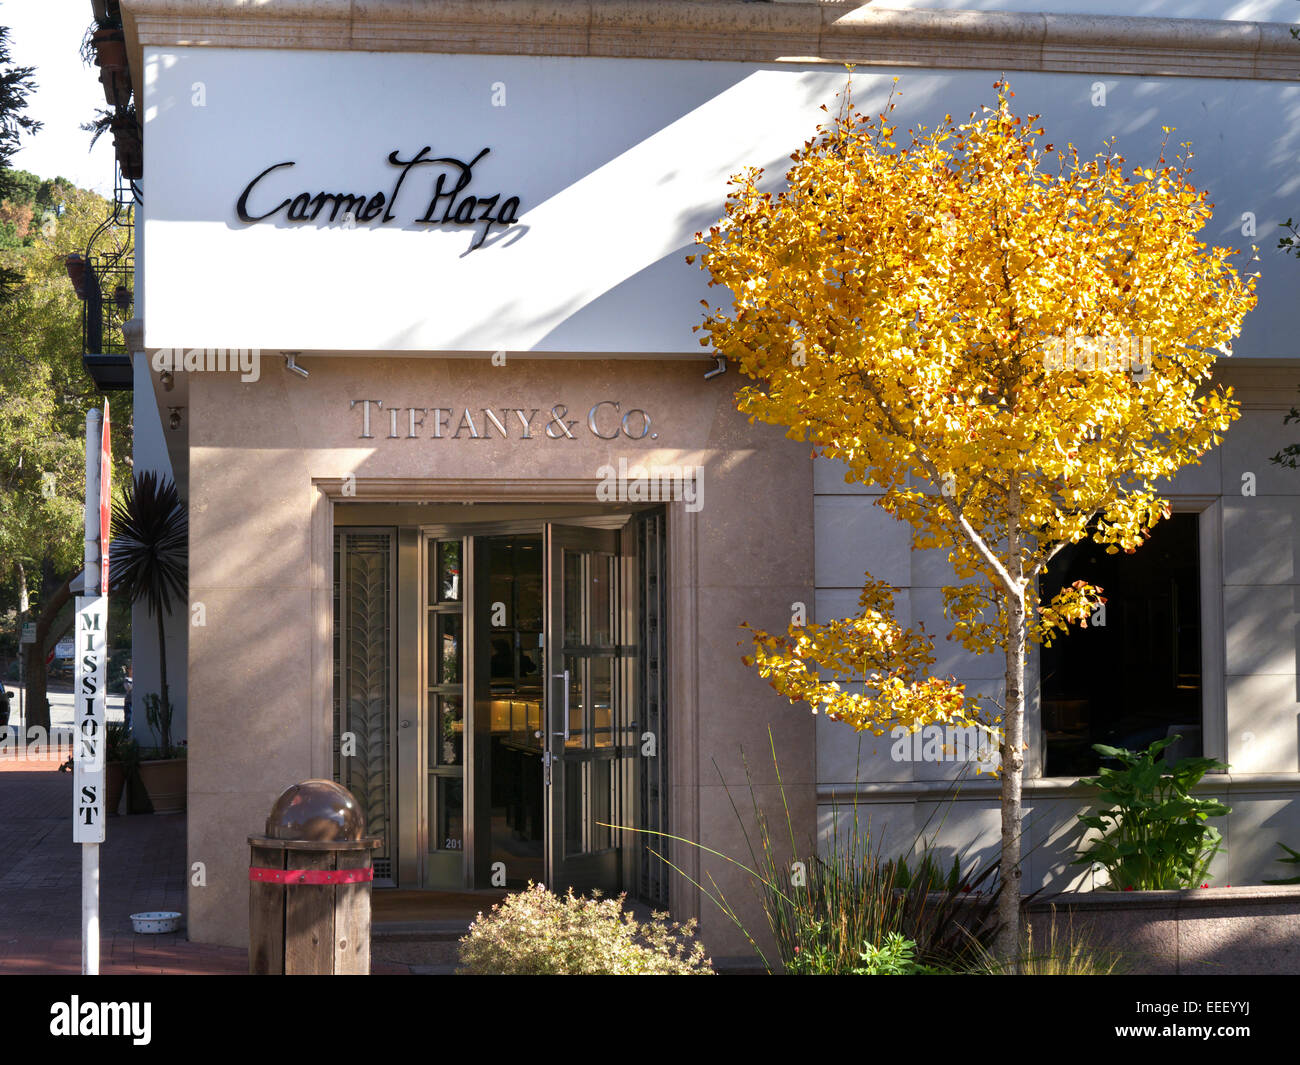 Tiffany & Co logo, renowned fine jewelry store in Carmel Plaza Monterey California USA Stock Photo